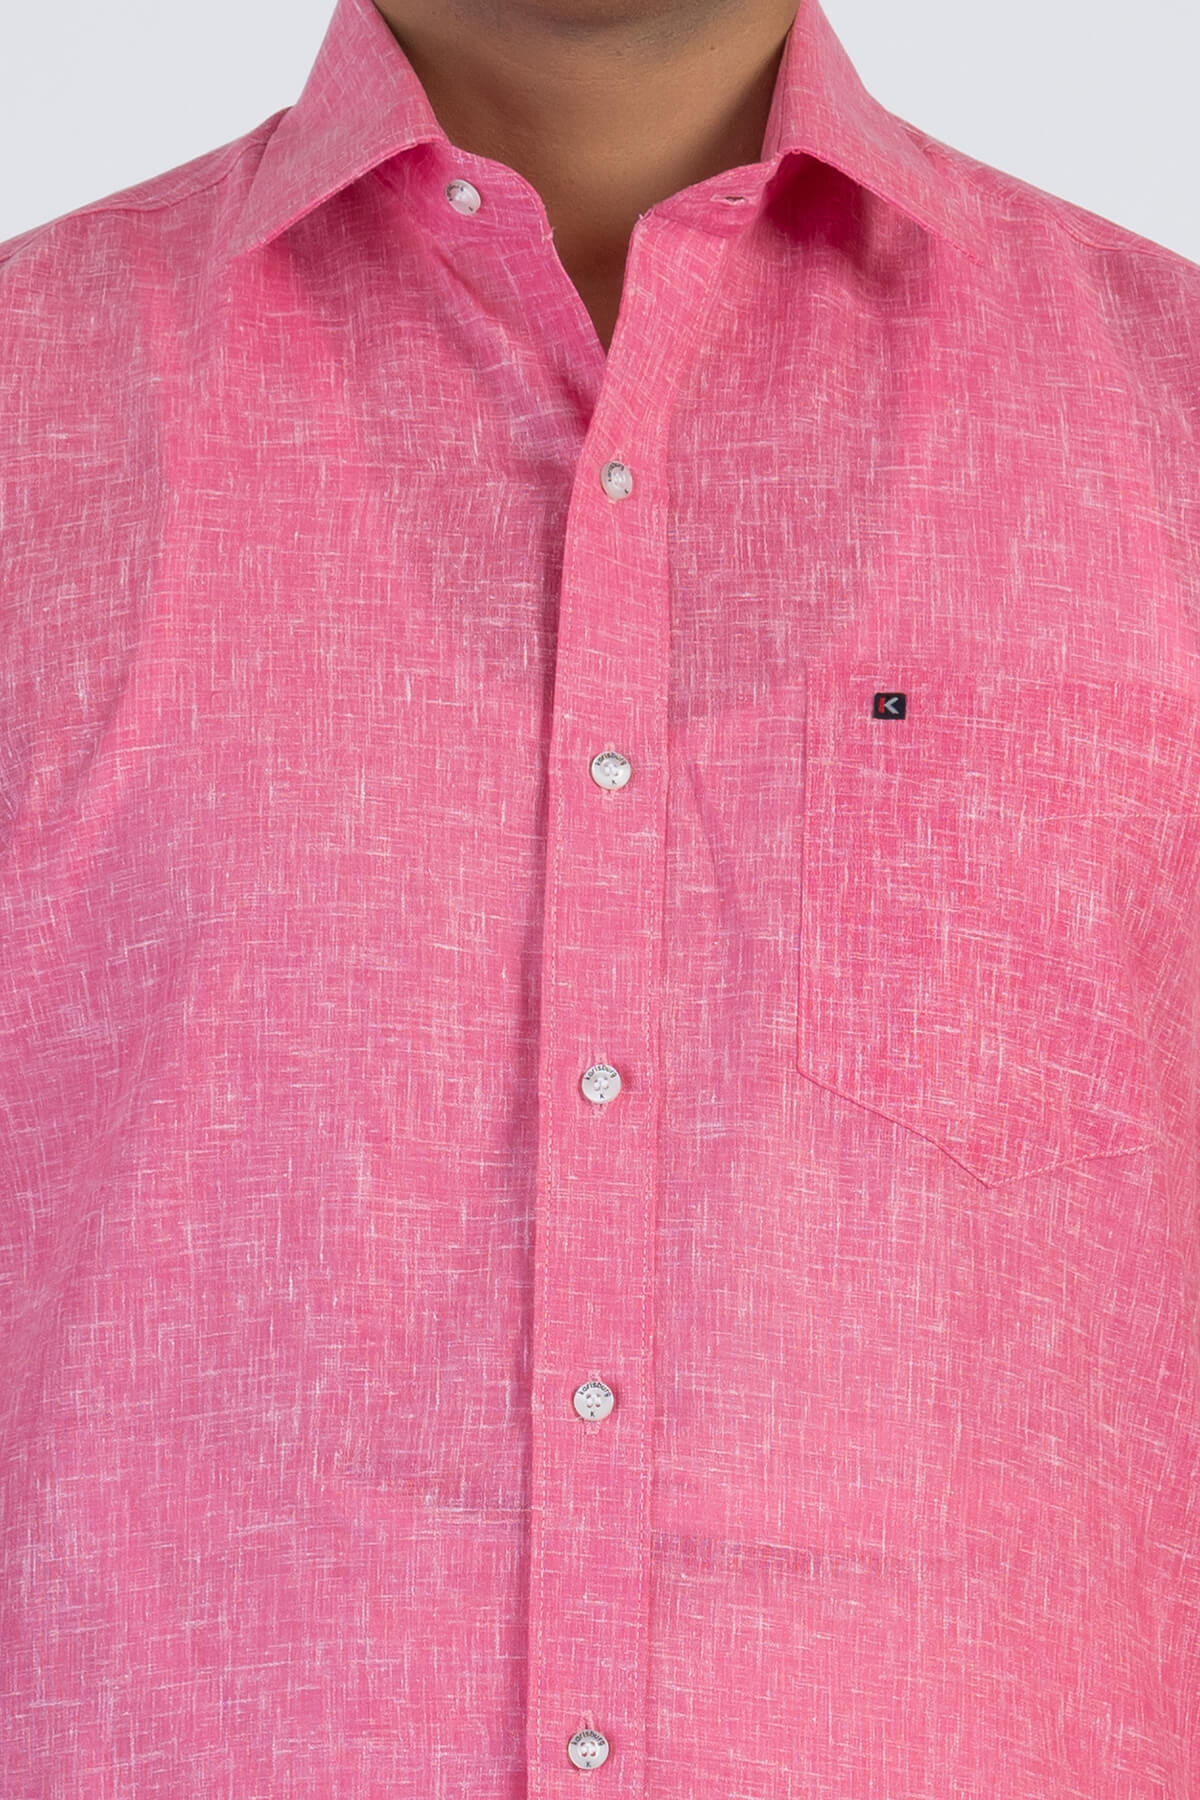 Men's Premium Cotton Dhoti with Dark Pink Elegant Border